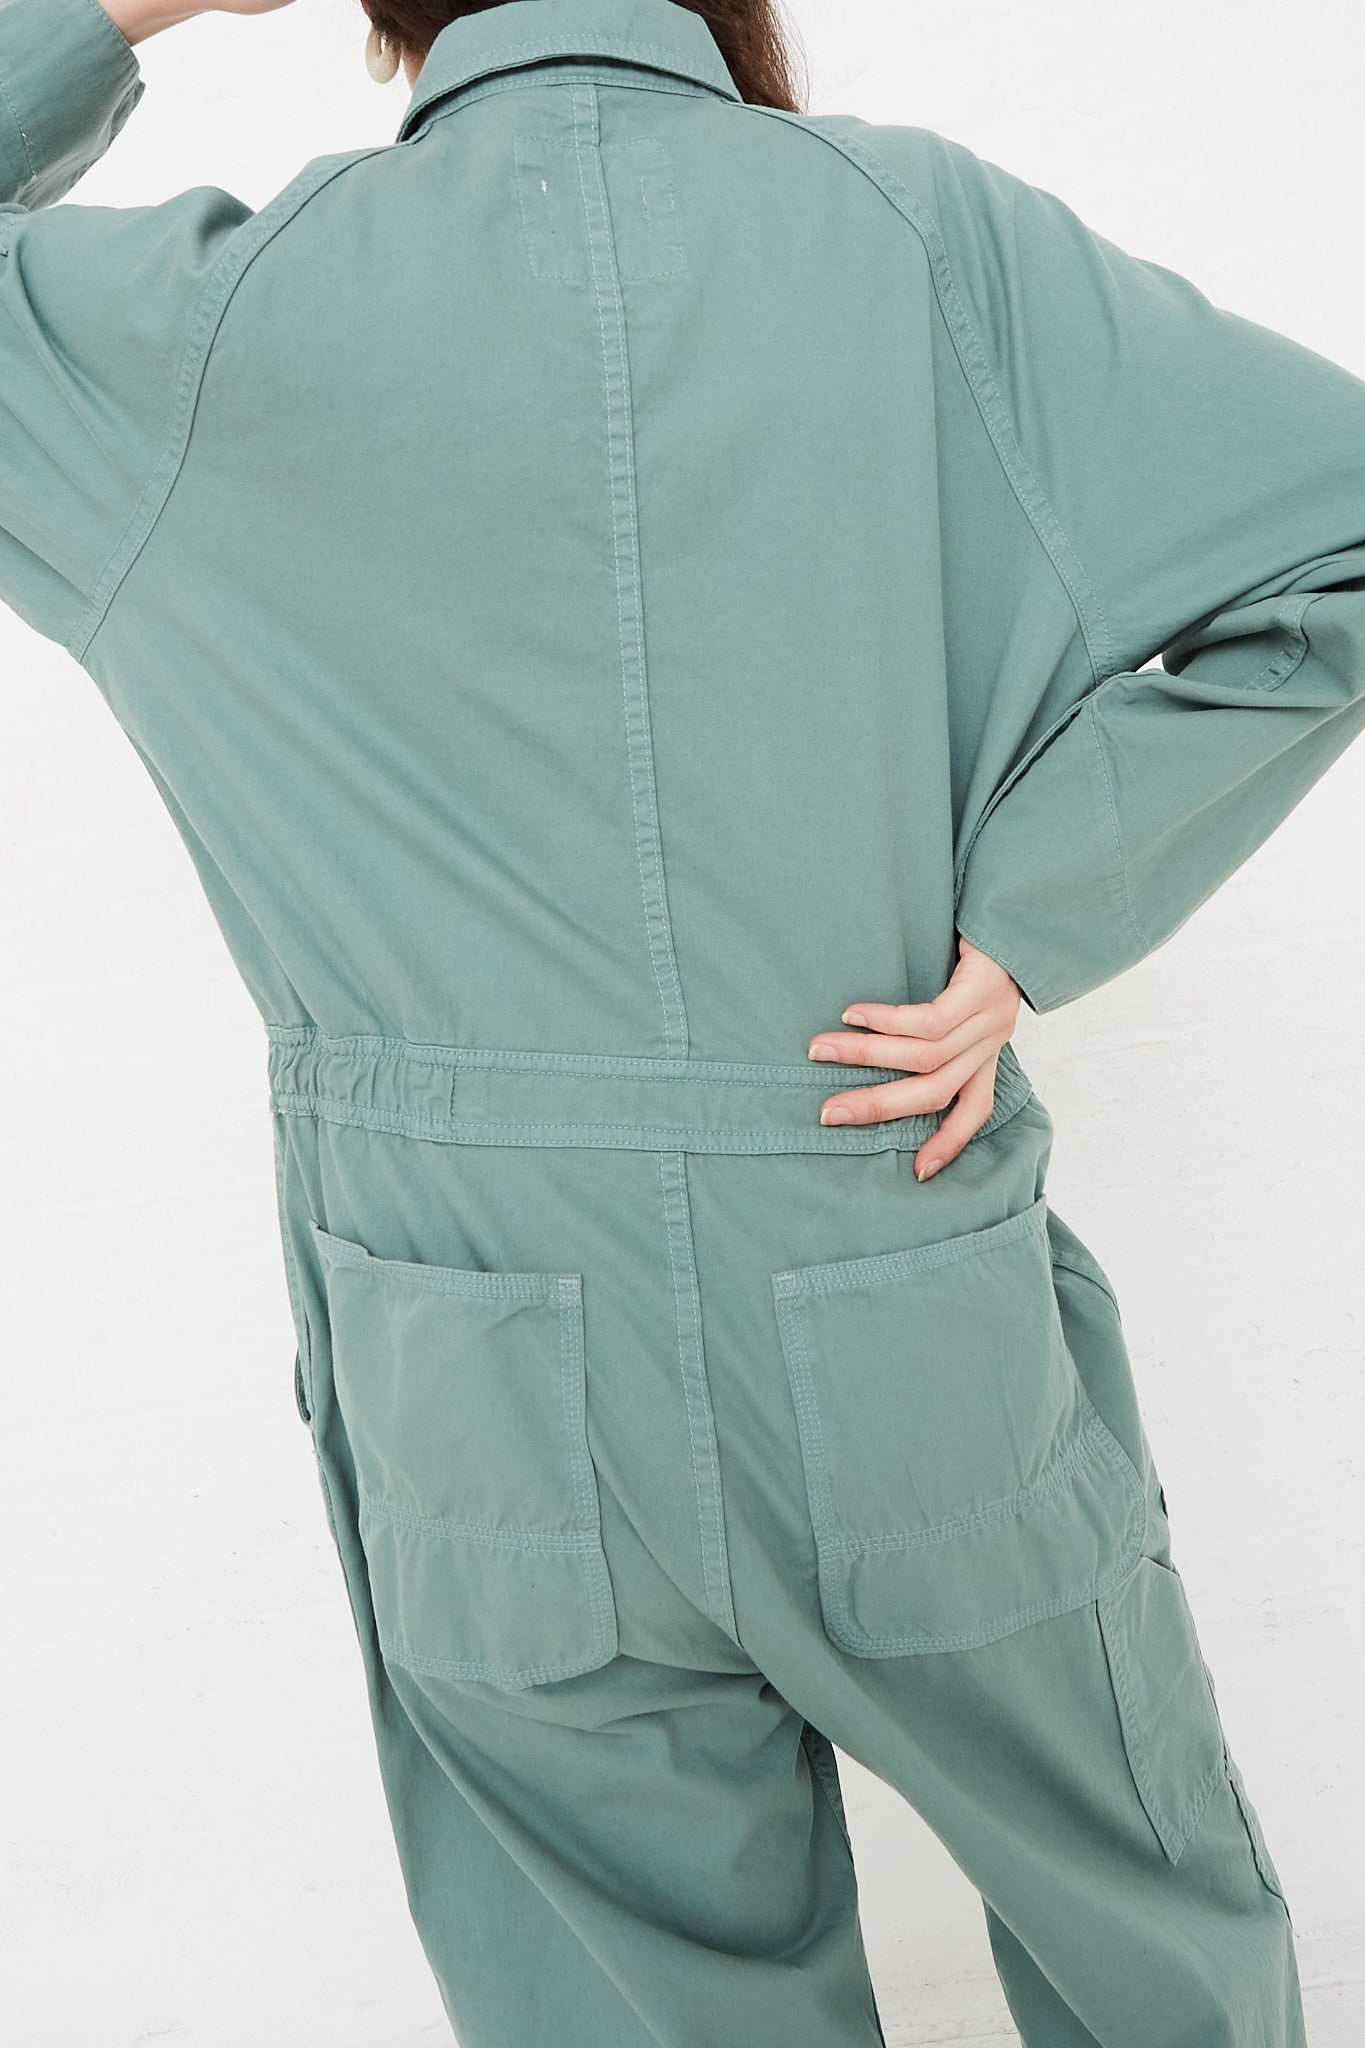 Rachel Comey Bley Jumpsuit in Sage back patch pocket detail